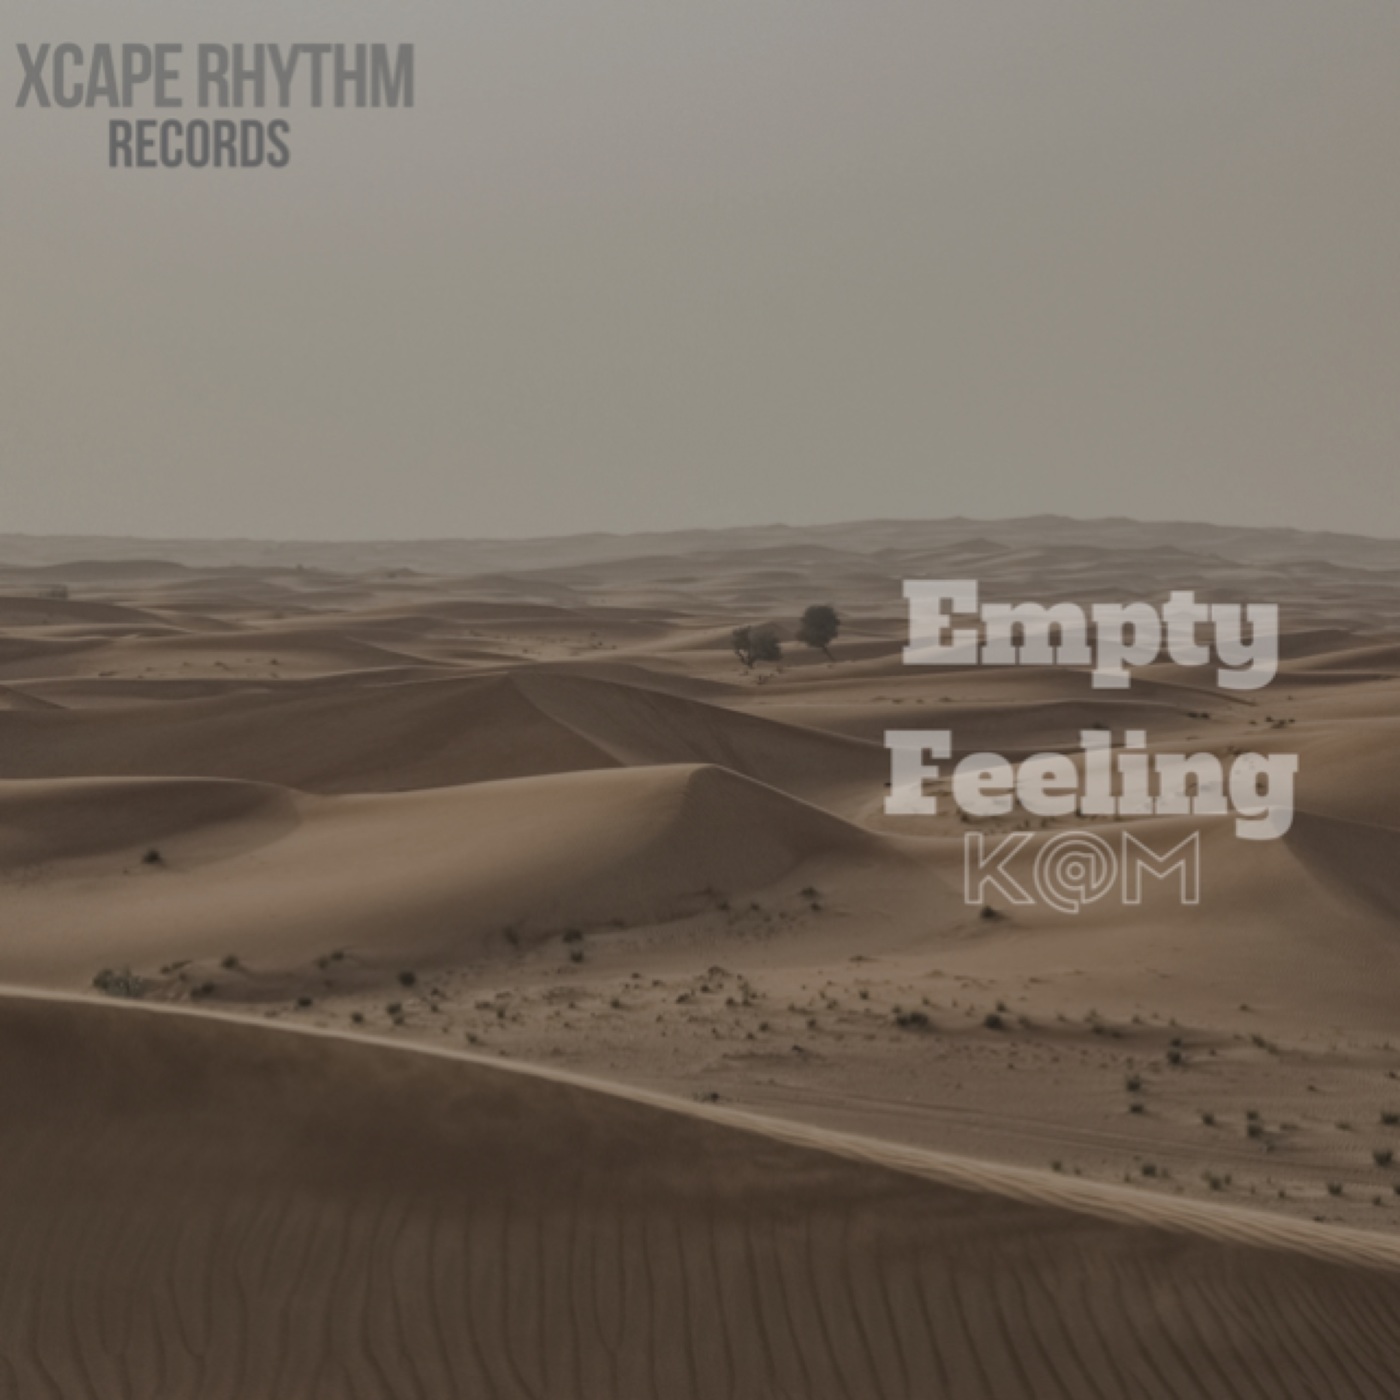 K@M - Empty Feeling / Xcape Rhythm Records